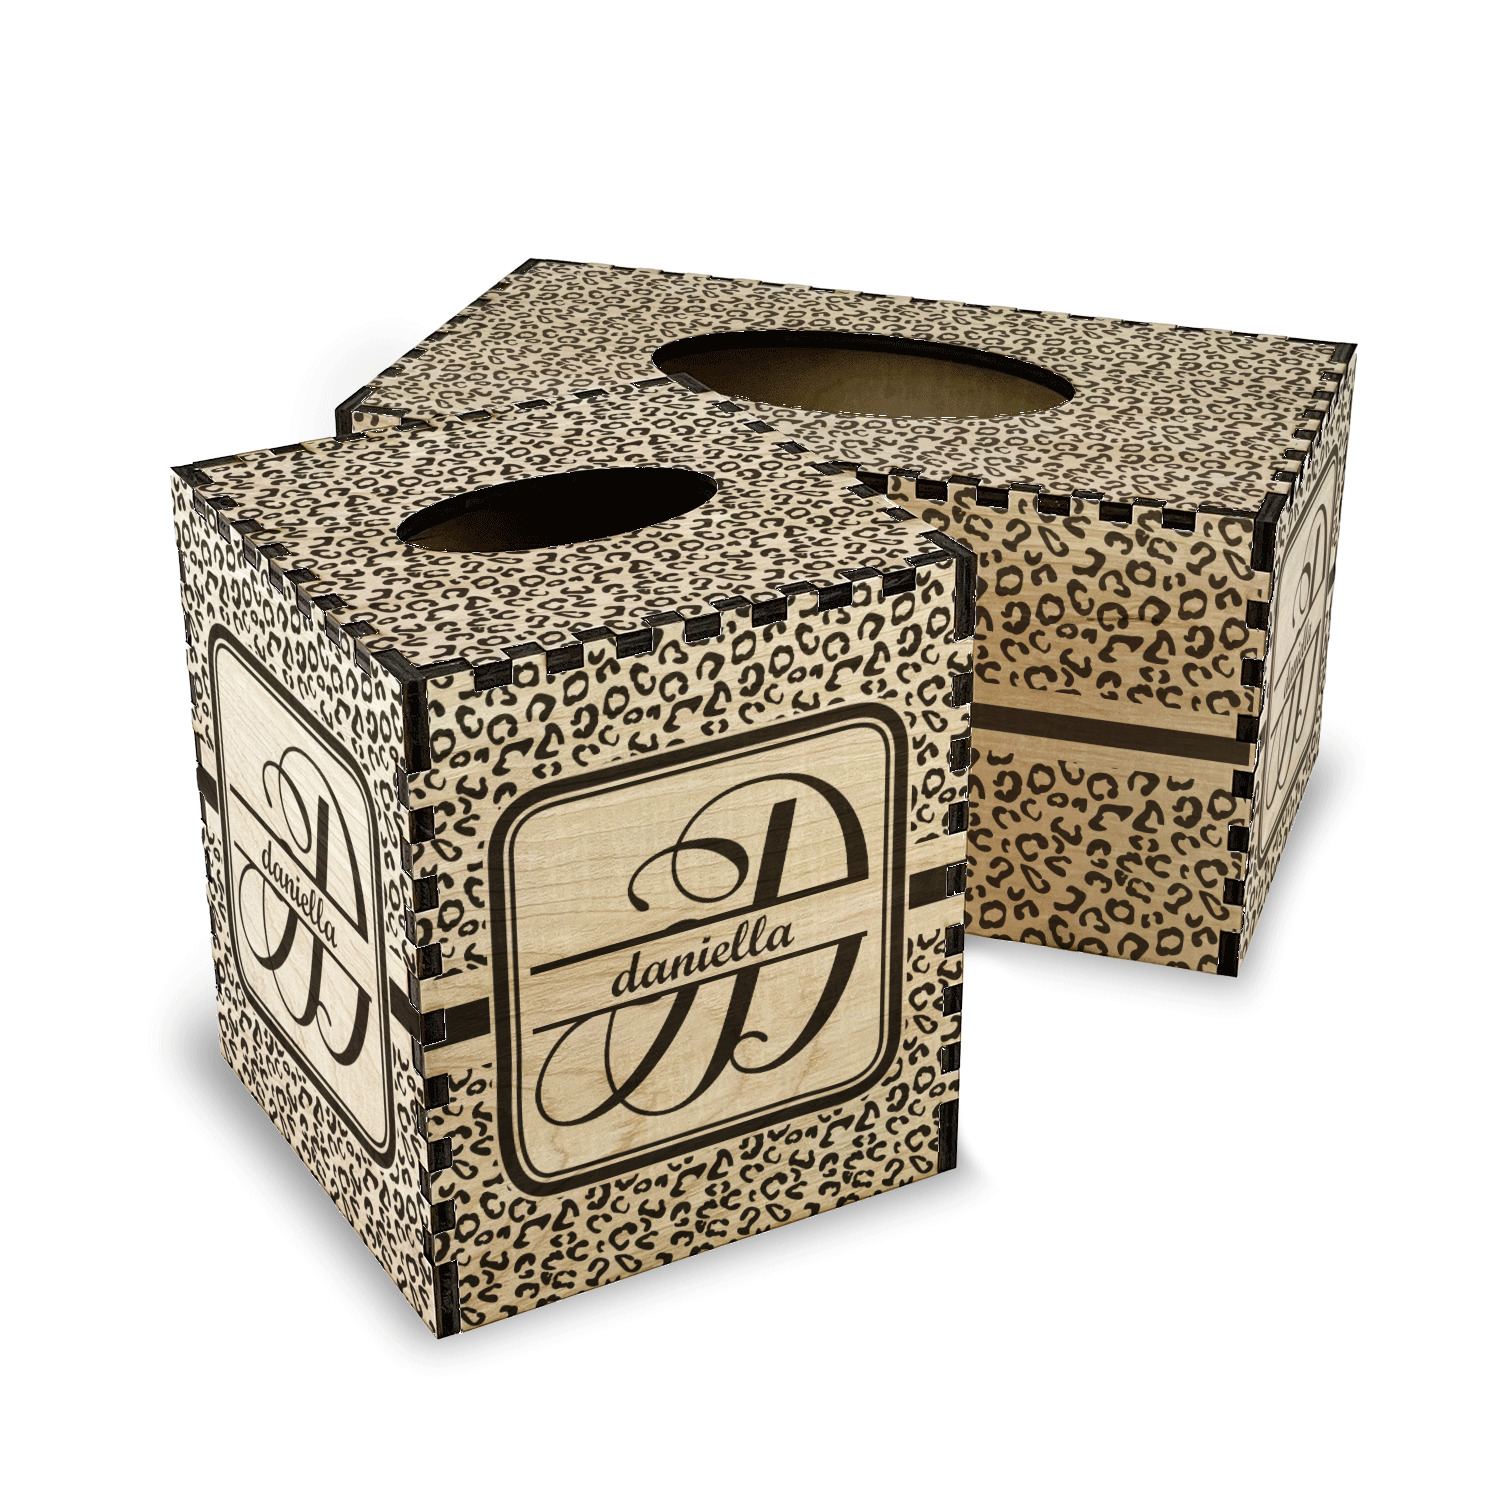 Leopard Tissue Box Cover wooden handmade 